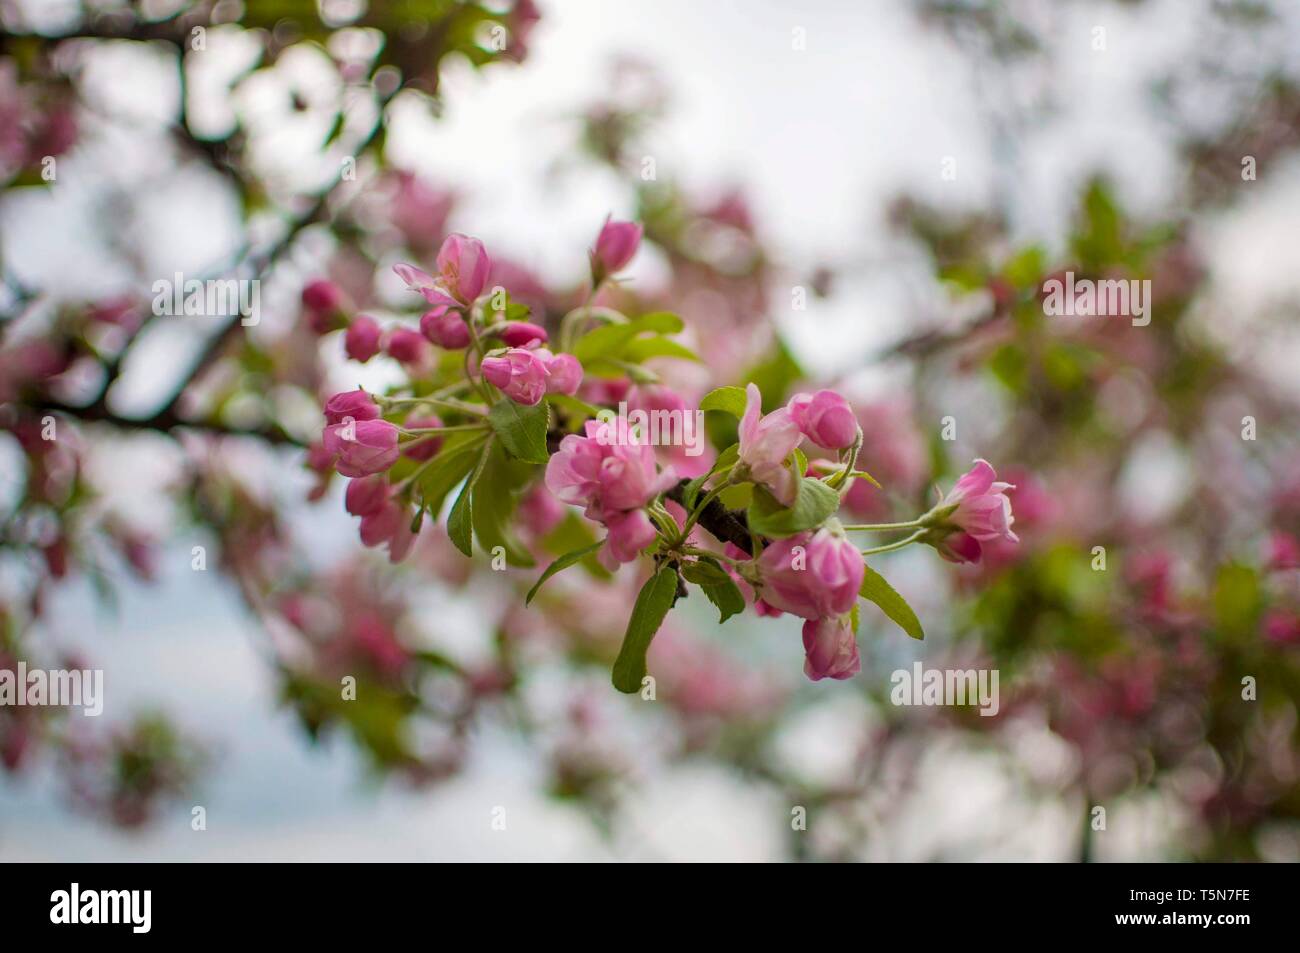 Pink sakura flower bloom in spring season. Cherry blossom with soft focus, Focus on center flower cluster. Stock Photo